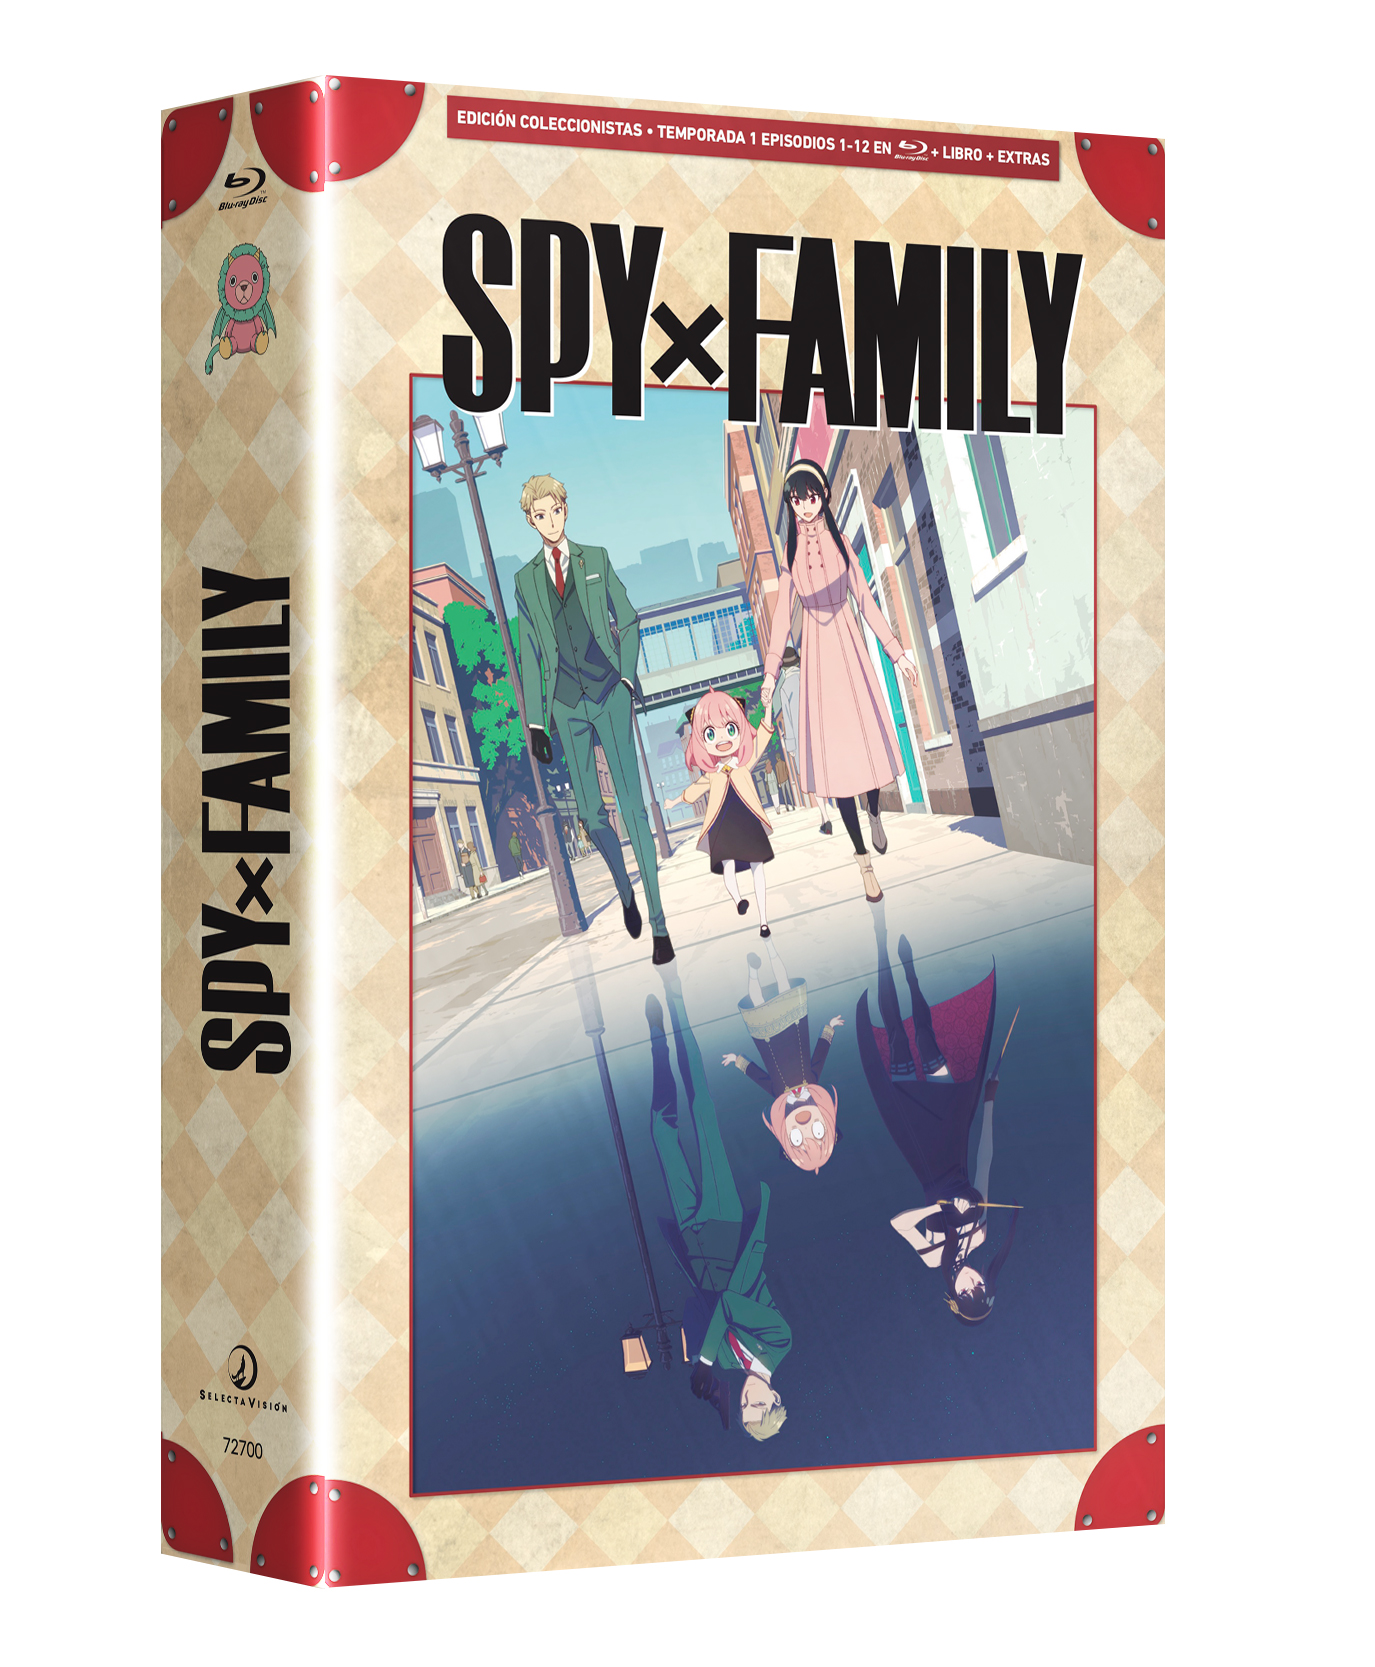 SPY X FAMILY TEMPORADA 1 episodios 1 al 12